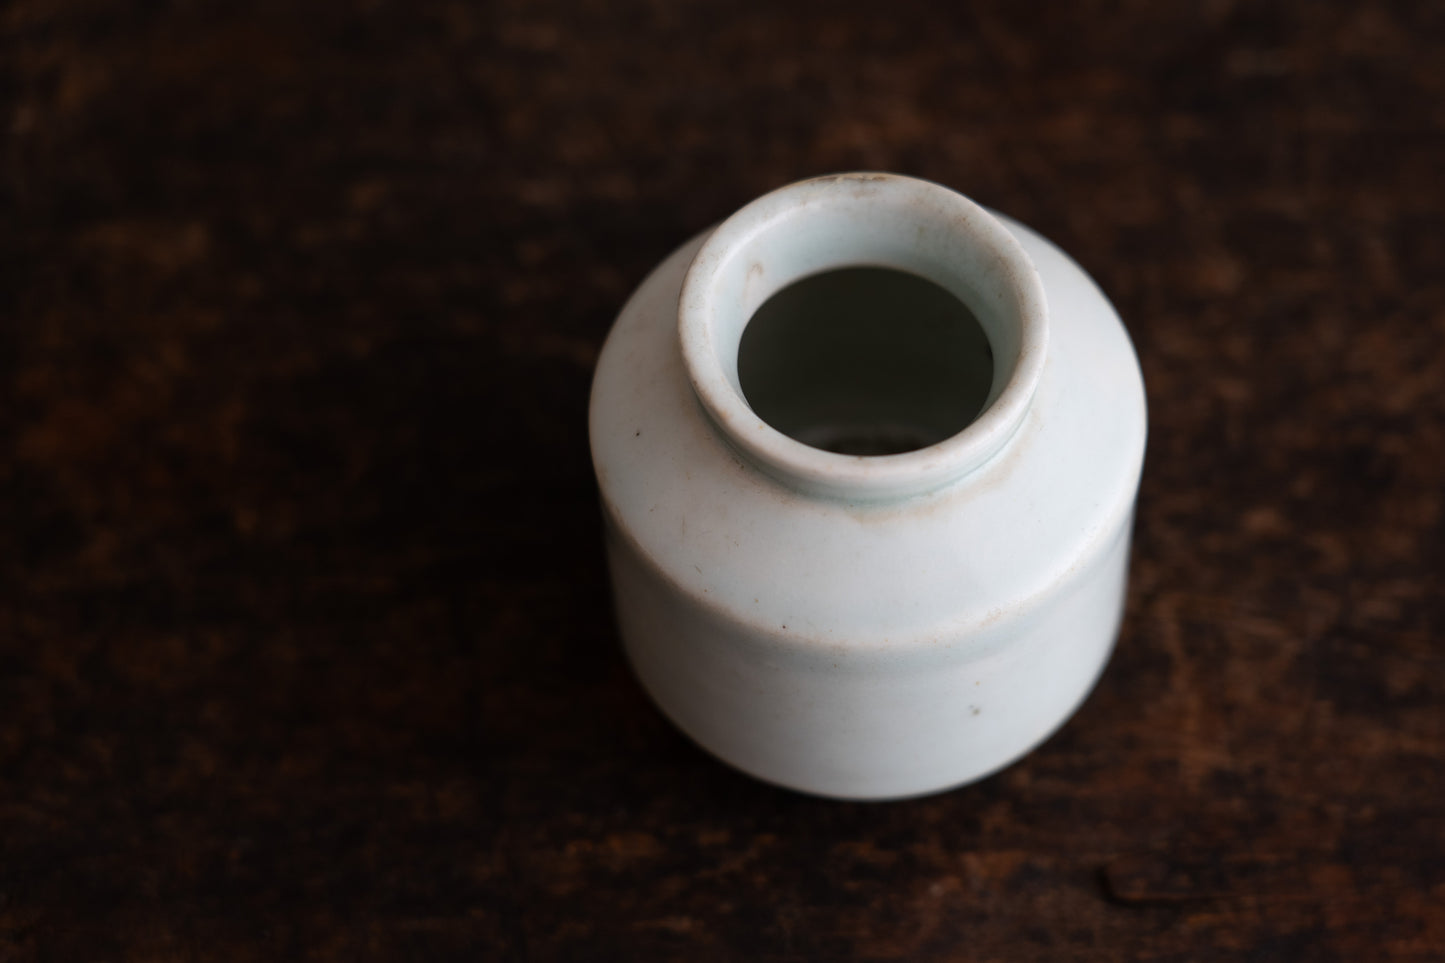 Cylindrical jar, White porcelain